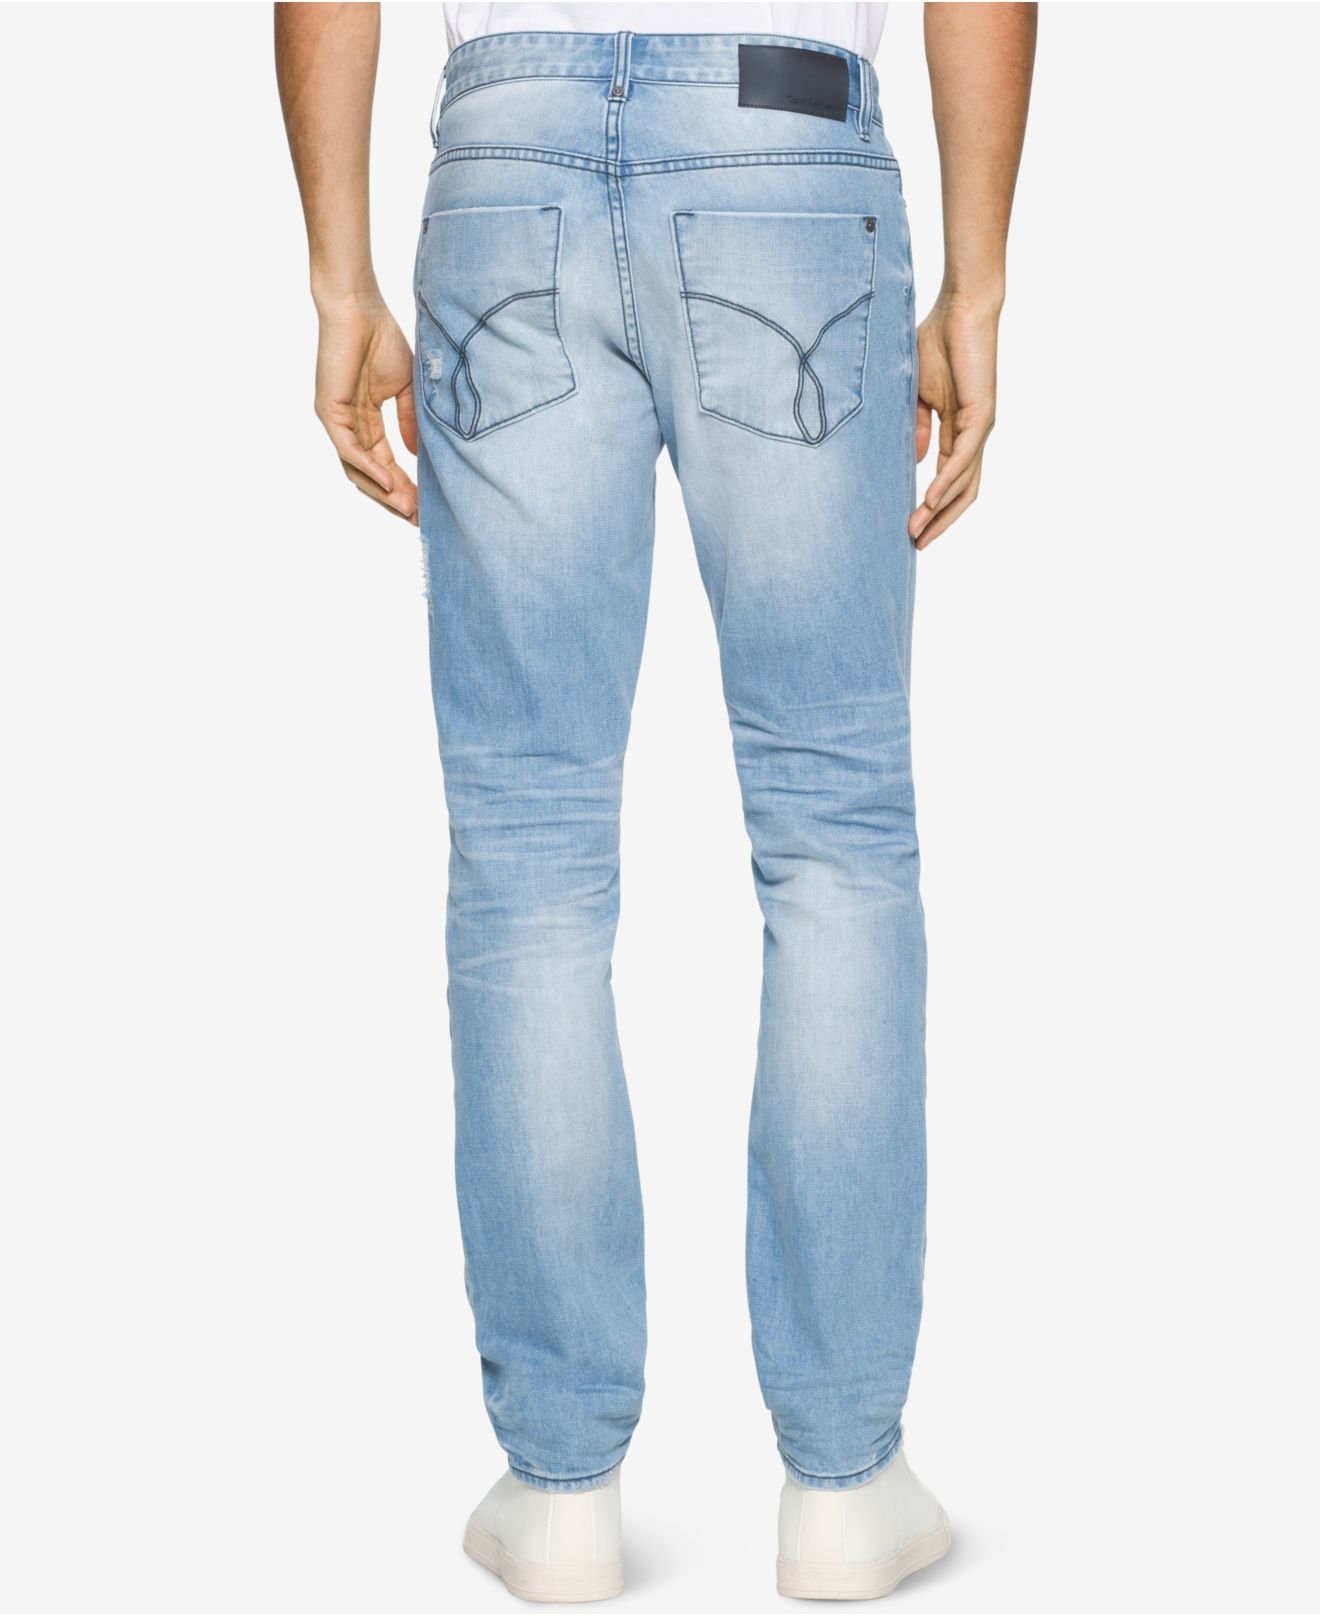 Lyst - Calvin Klein Jeans Men's Slim Straight Pure Blue Jeans in Blue